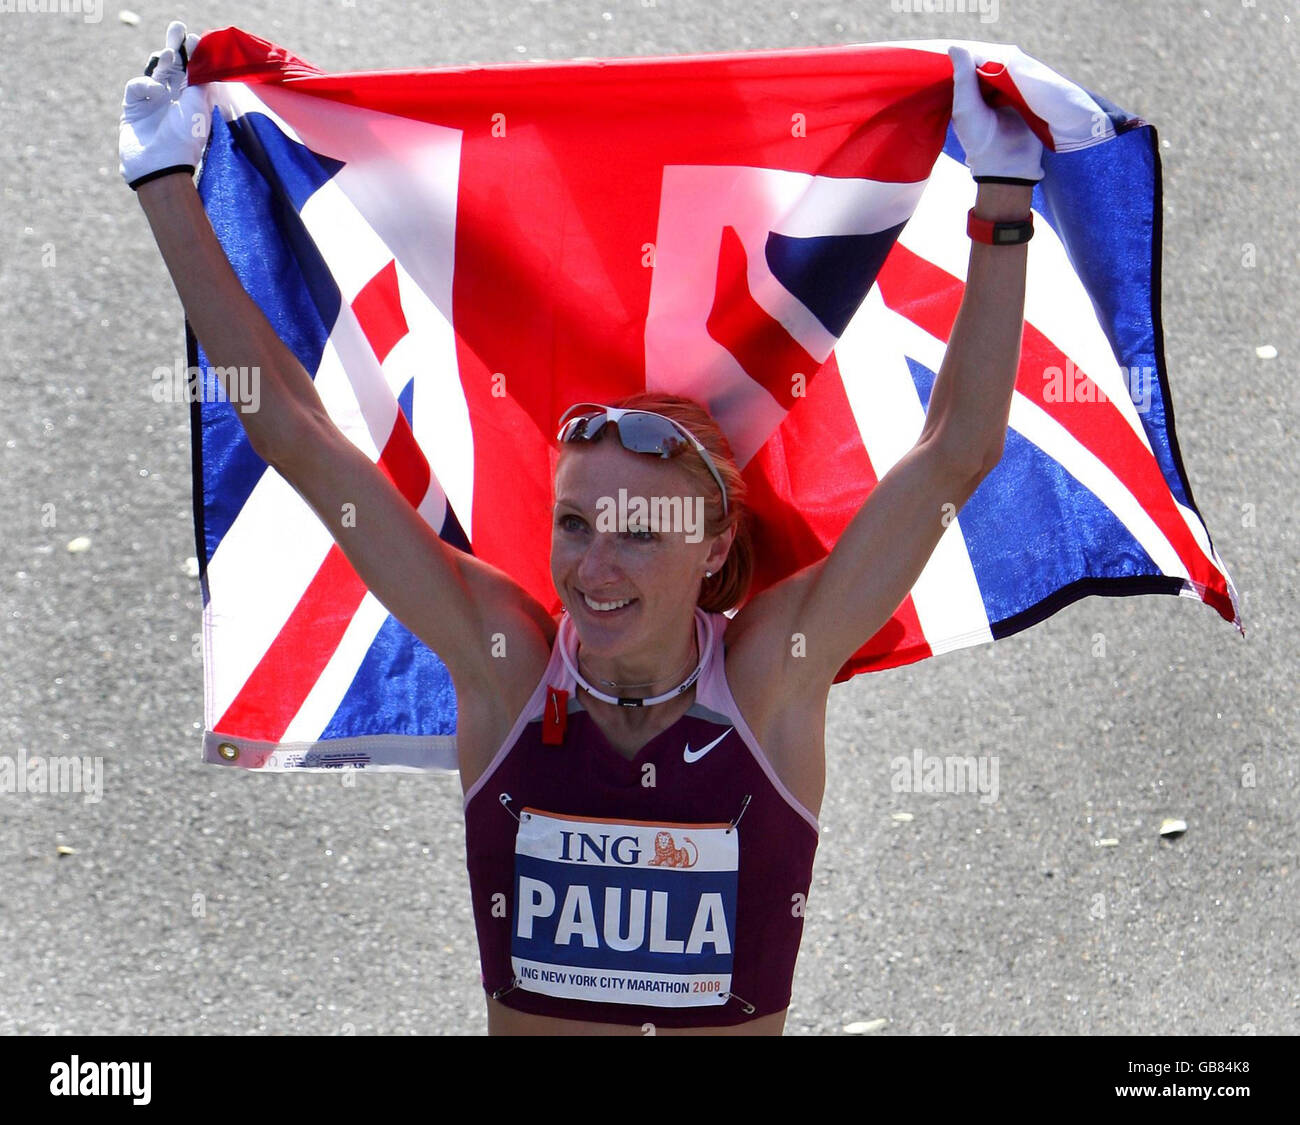 Athletics - New York Marathon - New York. Great Britain's Paula Radcliffe celebrates her win in the New York Marathon, New York, USA. Stock Photo